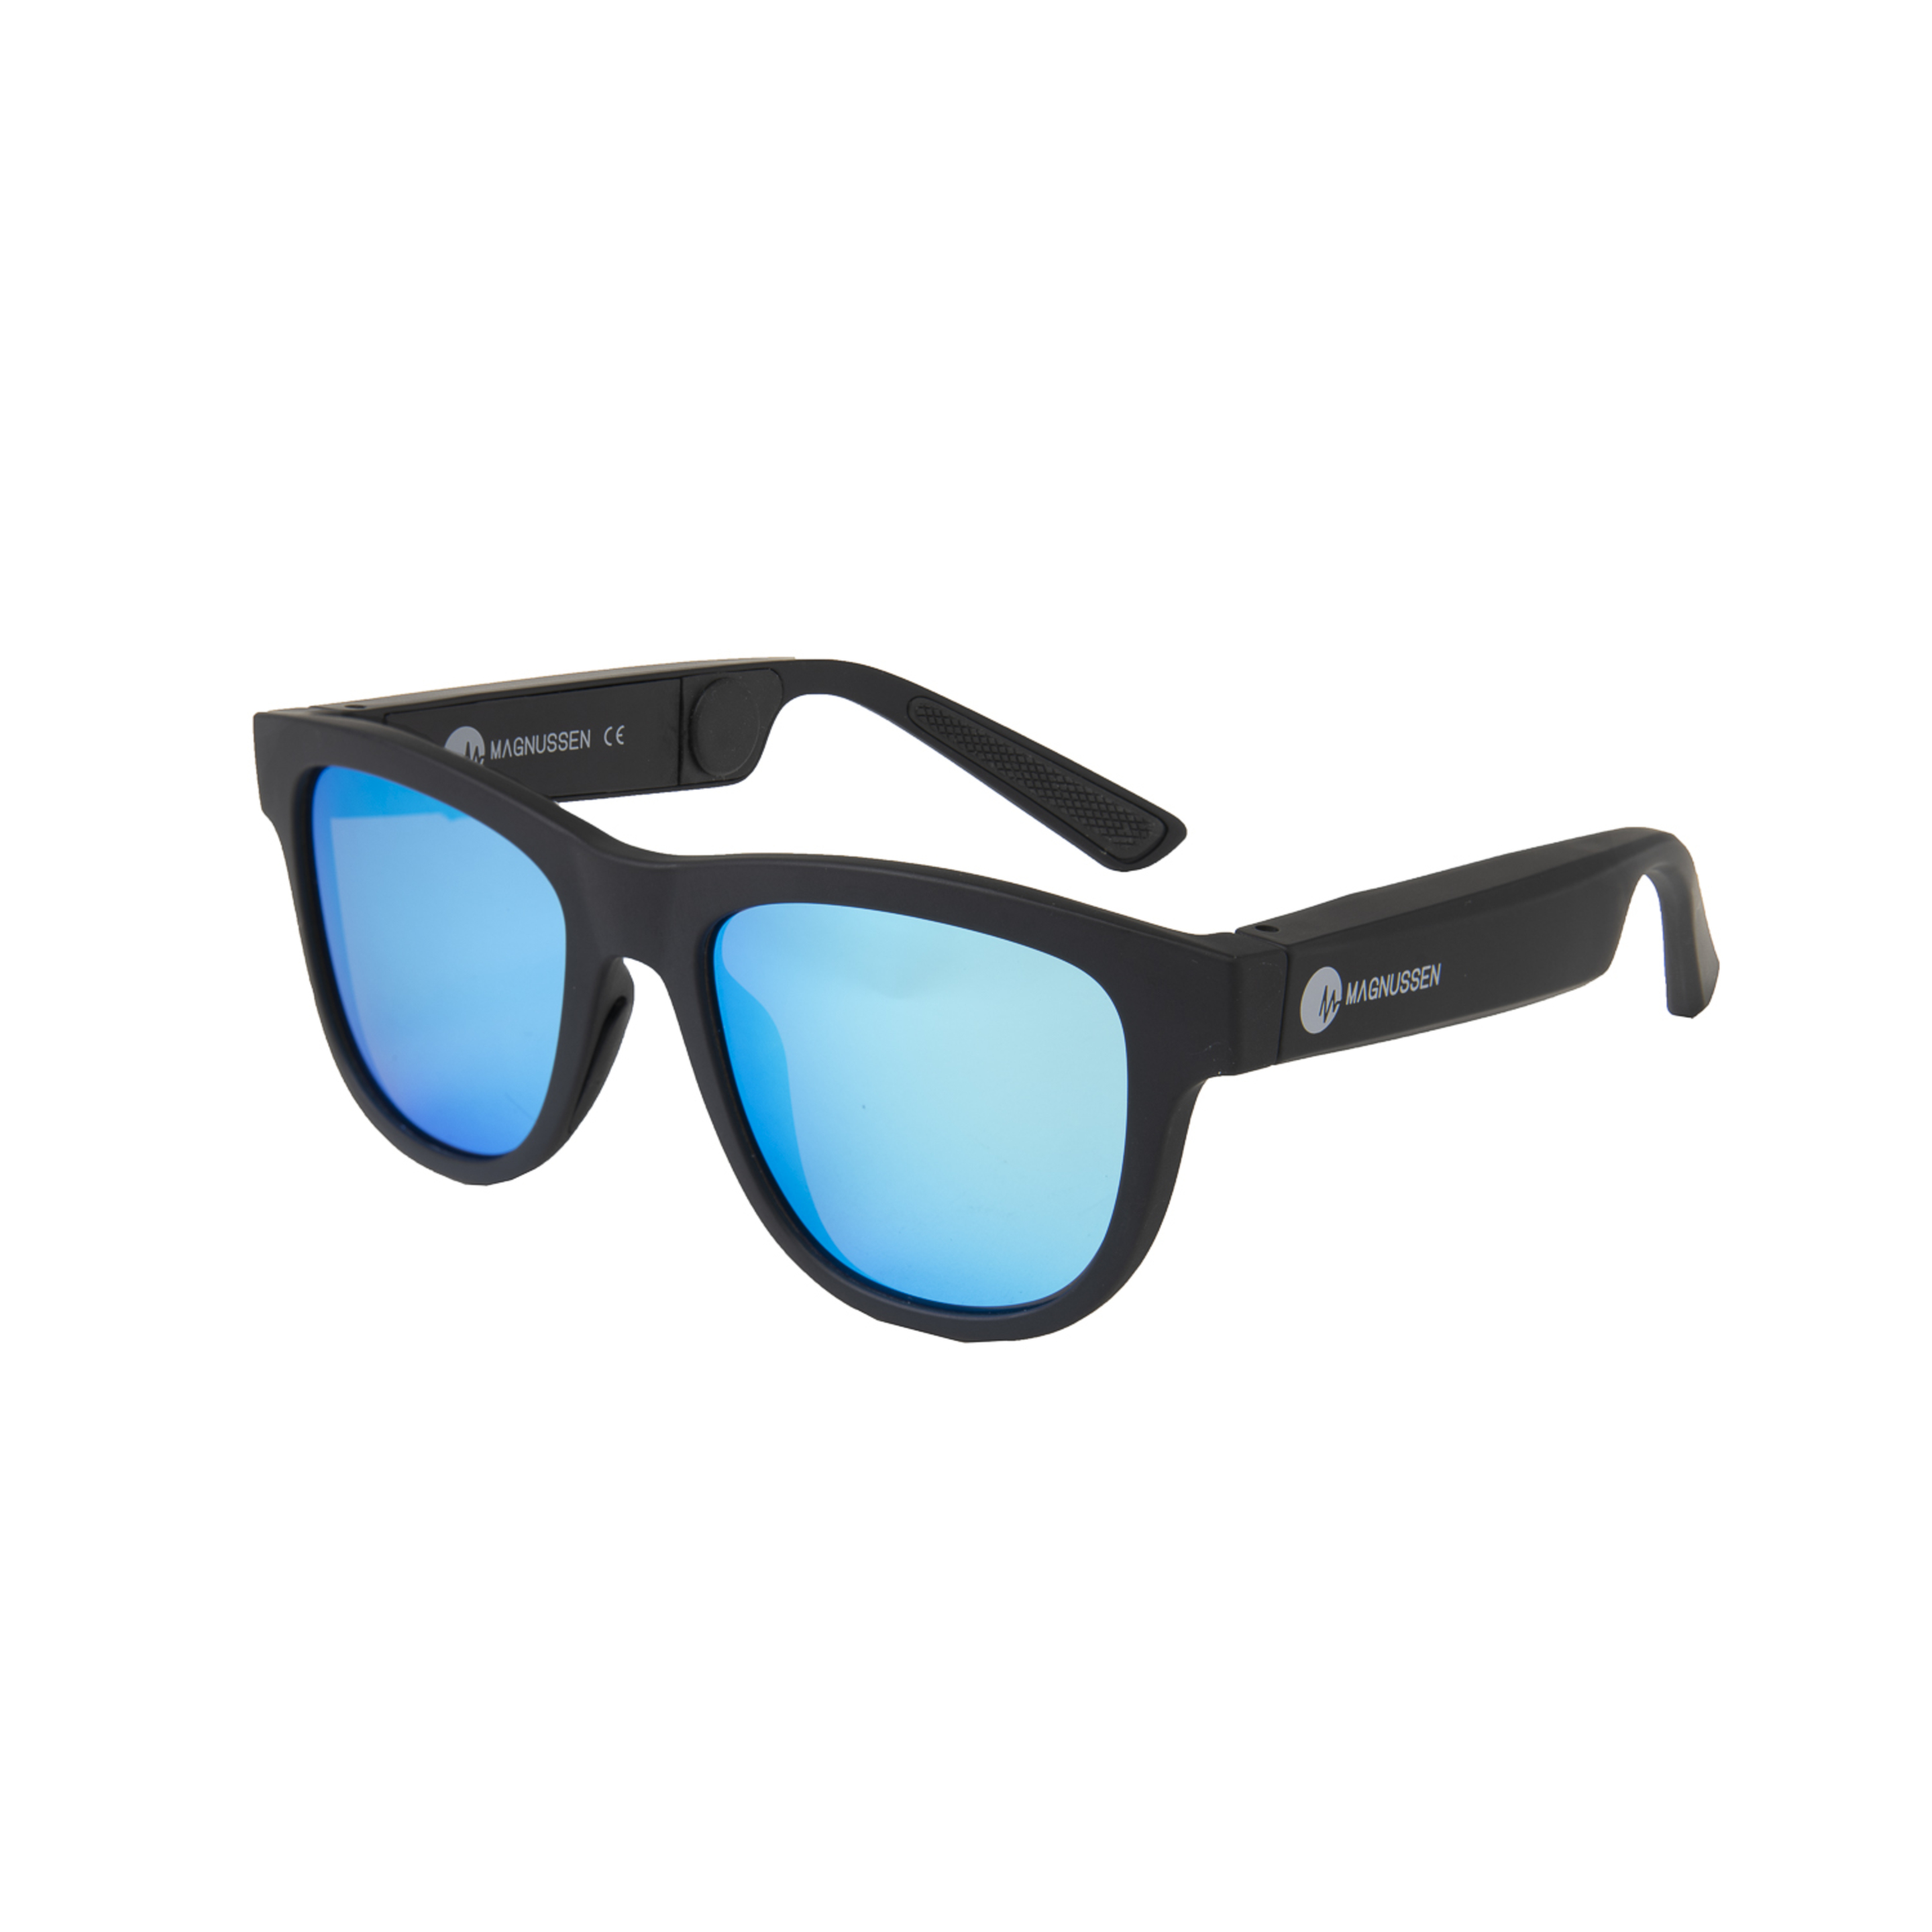 Gafas De Sol Magnussen G1 Bluetooth - Negro/Azul  MKP